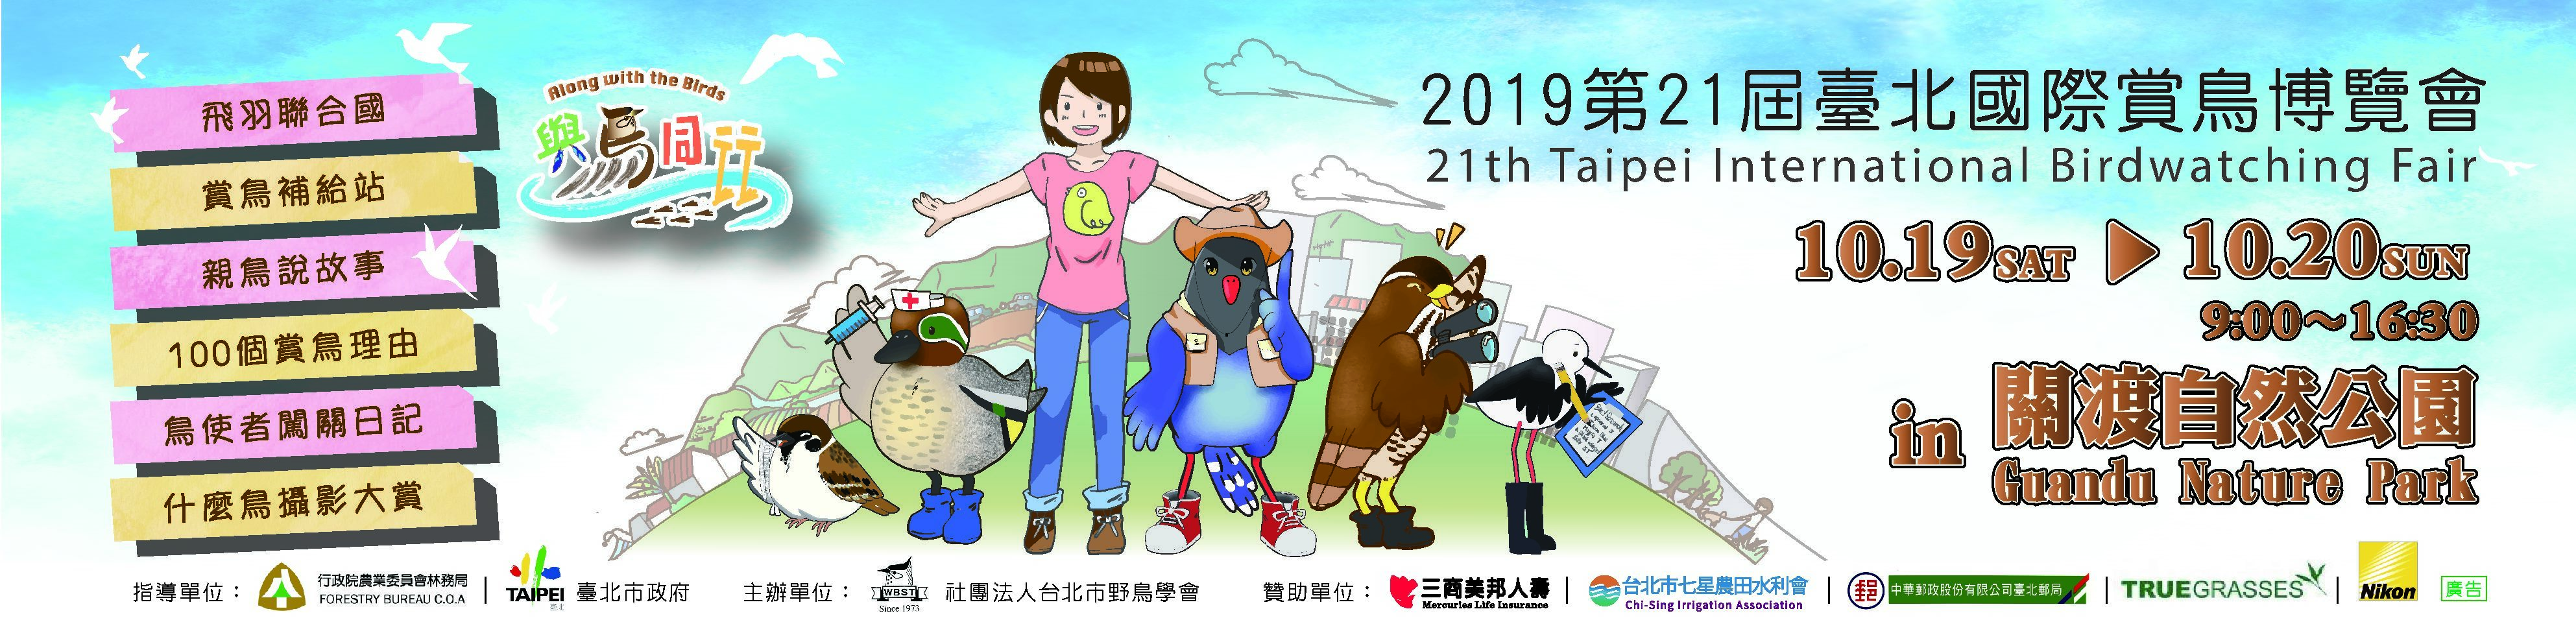 21st Taipei International Bird Watching Fair